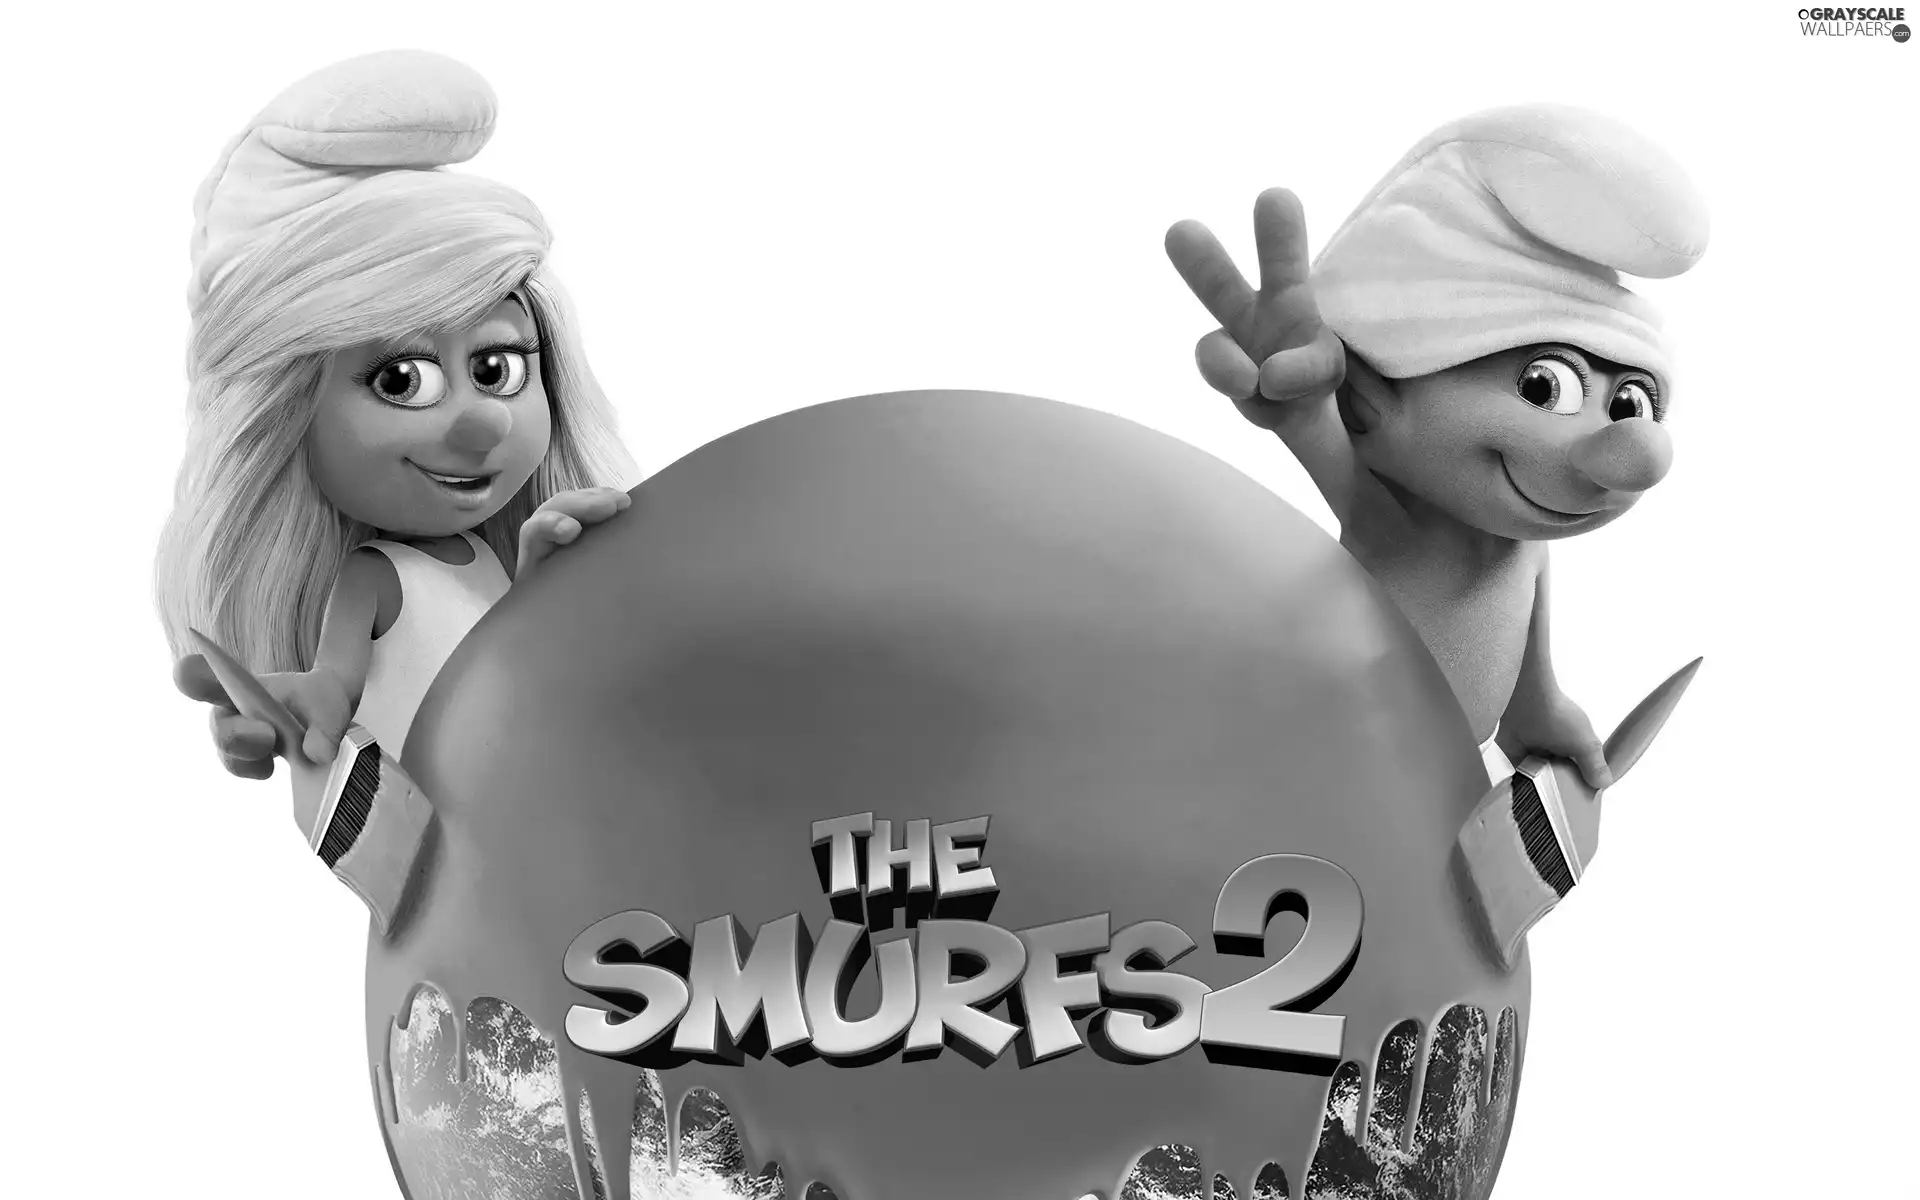 story, The Smurfs 2